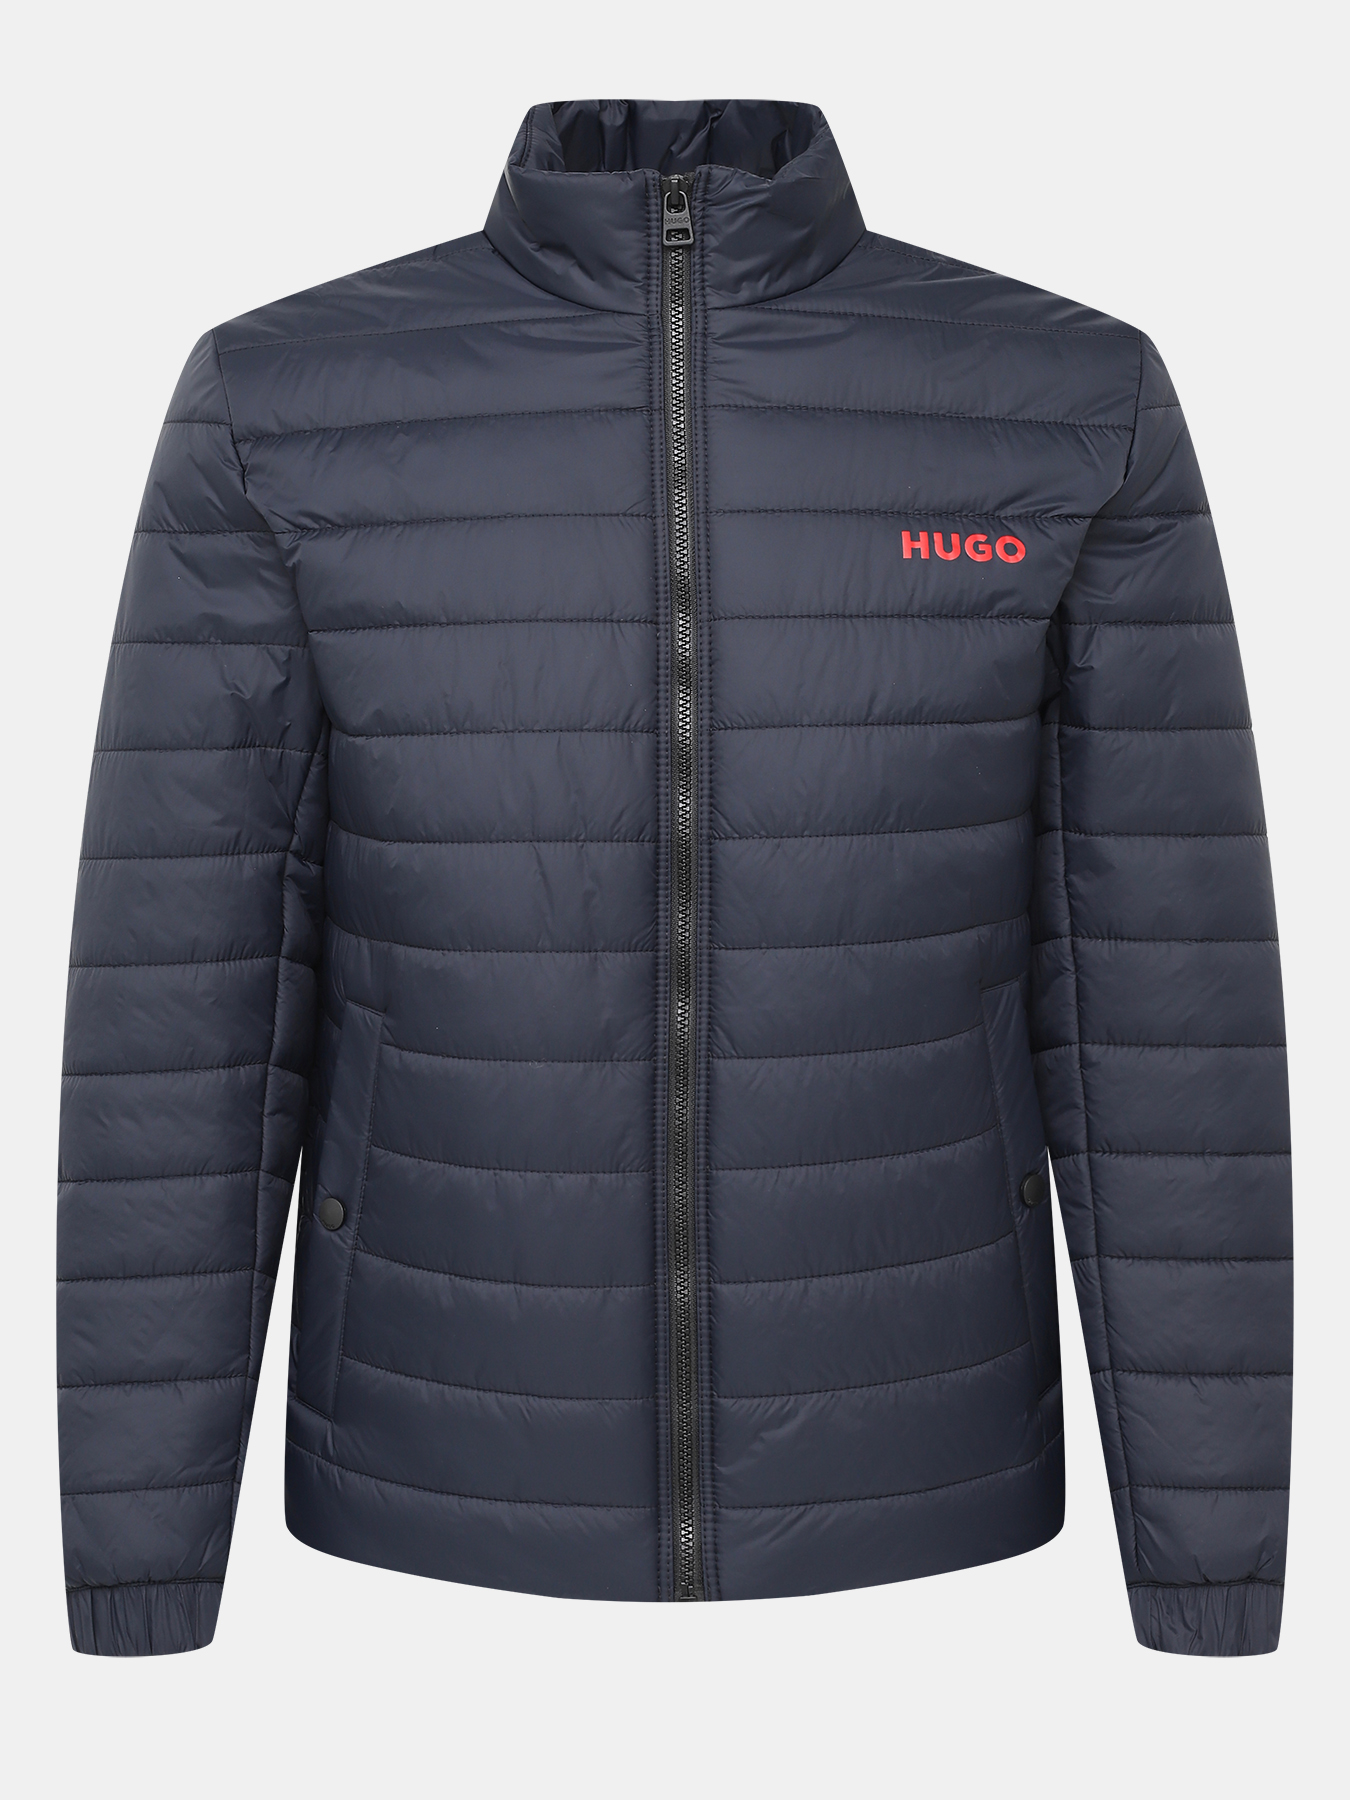 Куртка Benti HUGO 421240-045, цвет темно-синий, размер 52-54 - фото 1